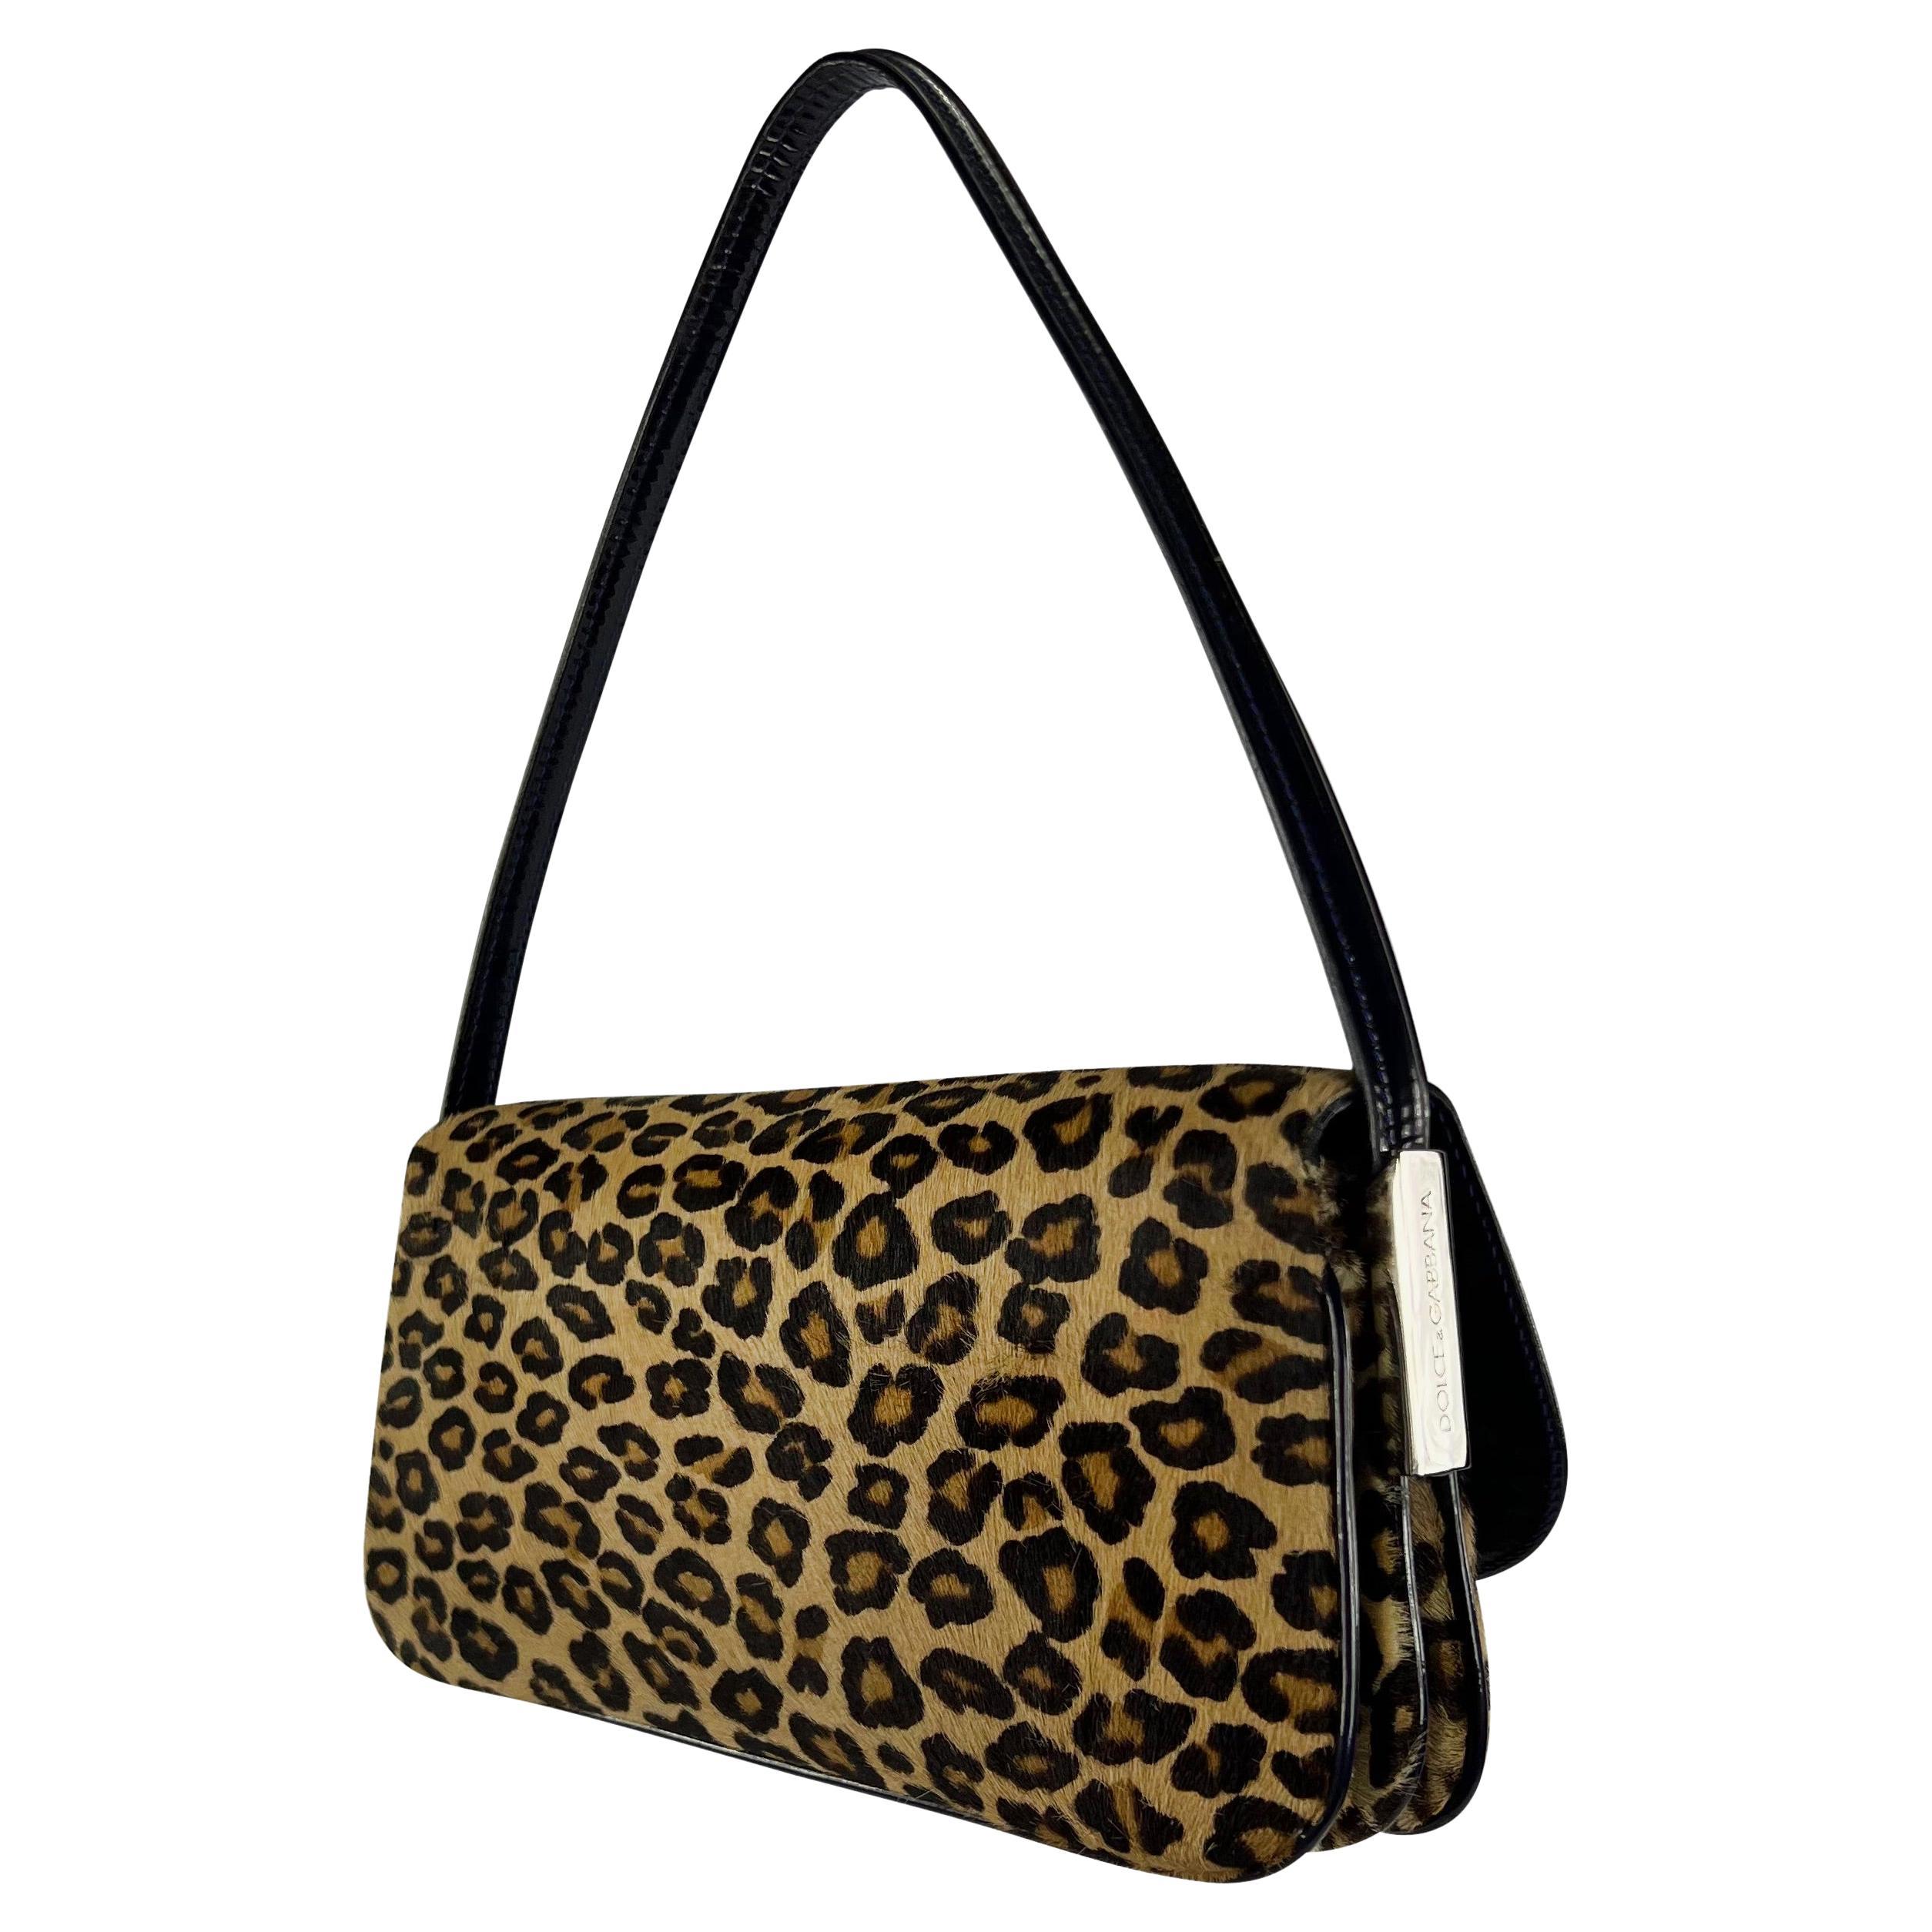 F/W 2000 Dolce & Gabbana Cheetah Print Pony Hair Small Shoulder Bag For Sale 1